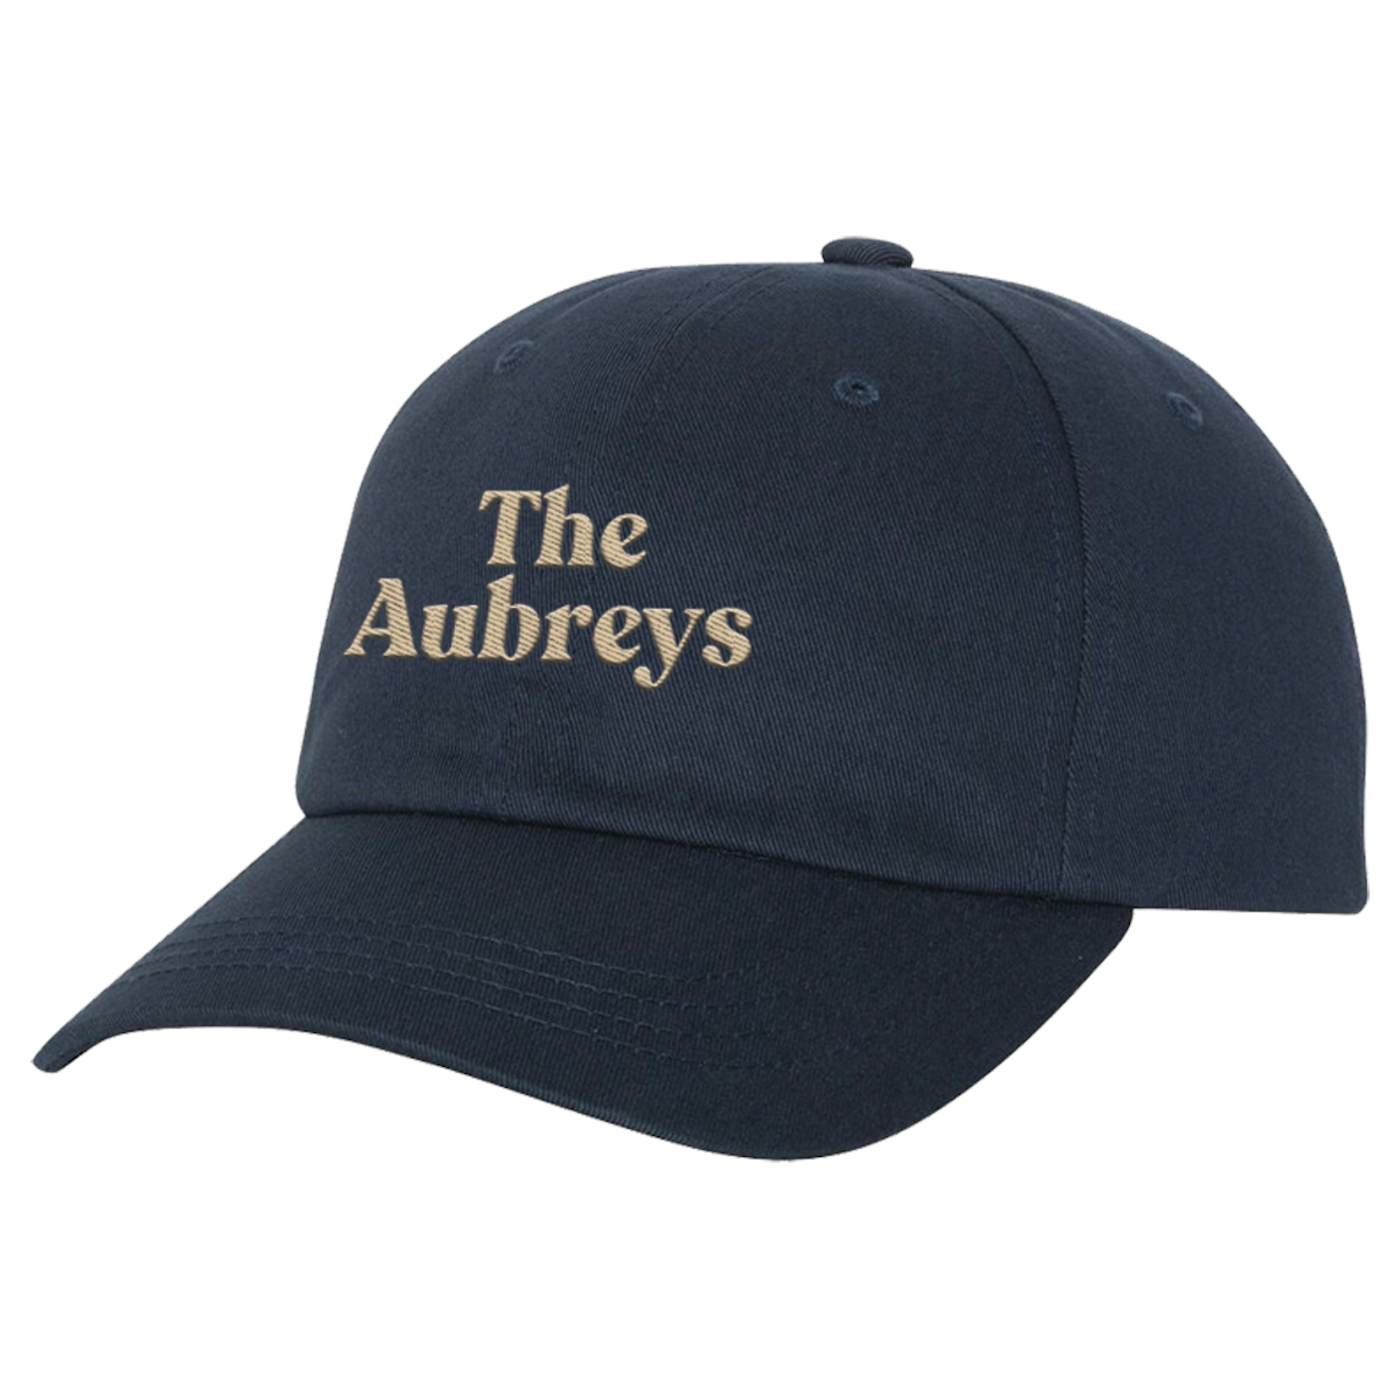 The Aubreys Store: Official Merch & Vinyl